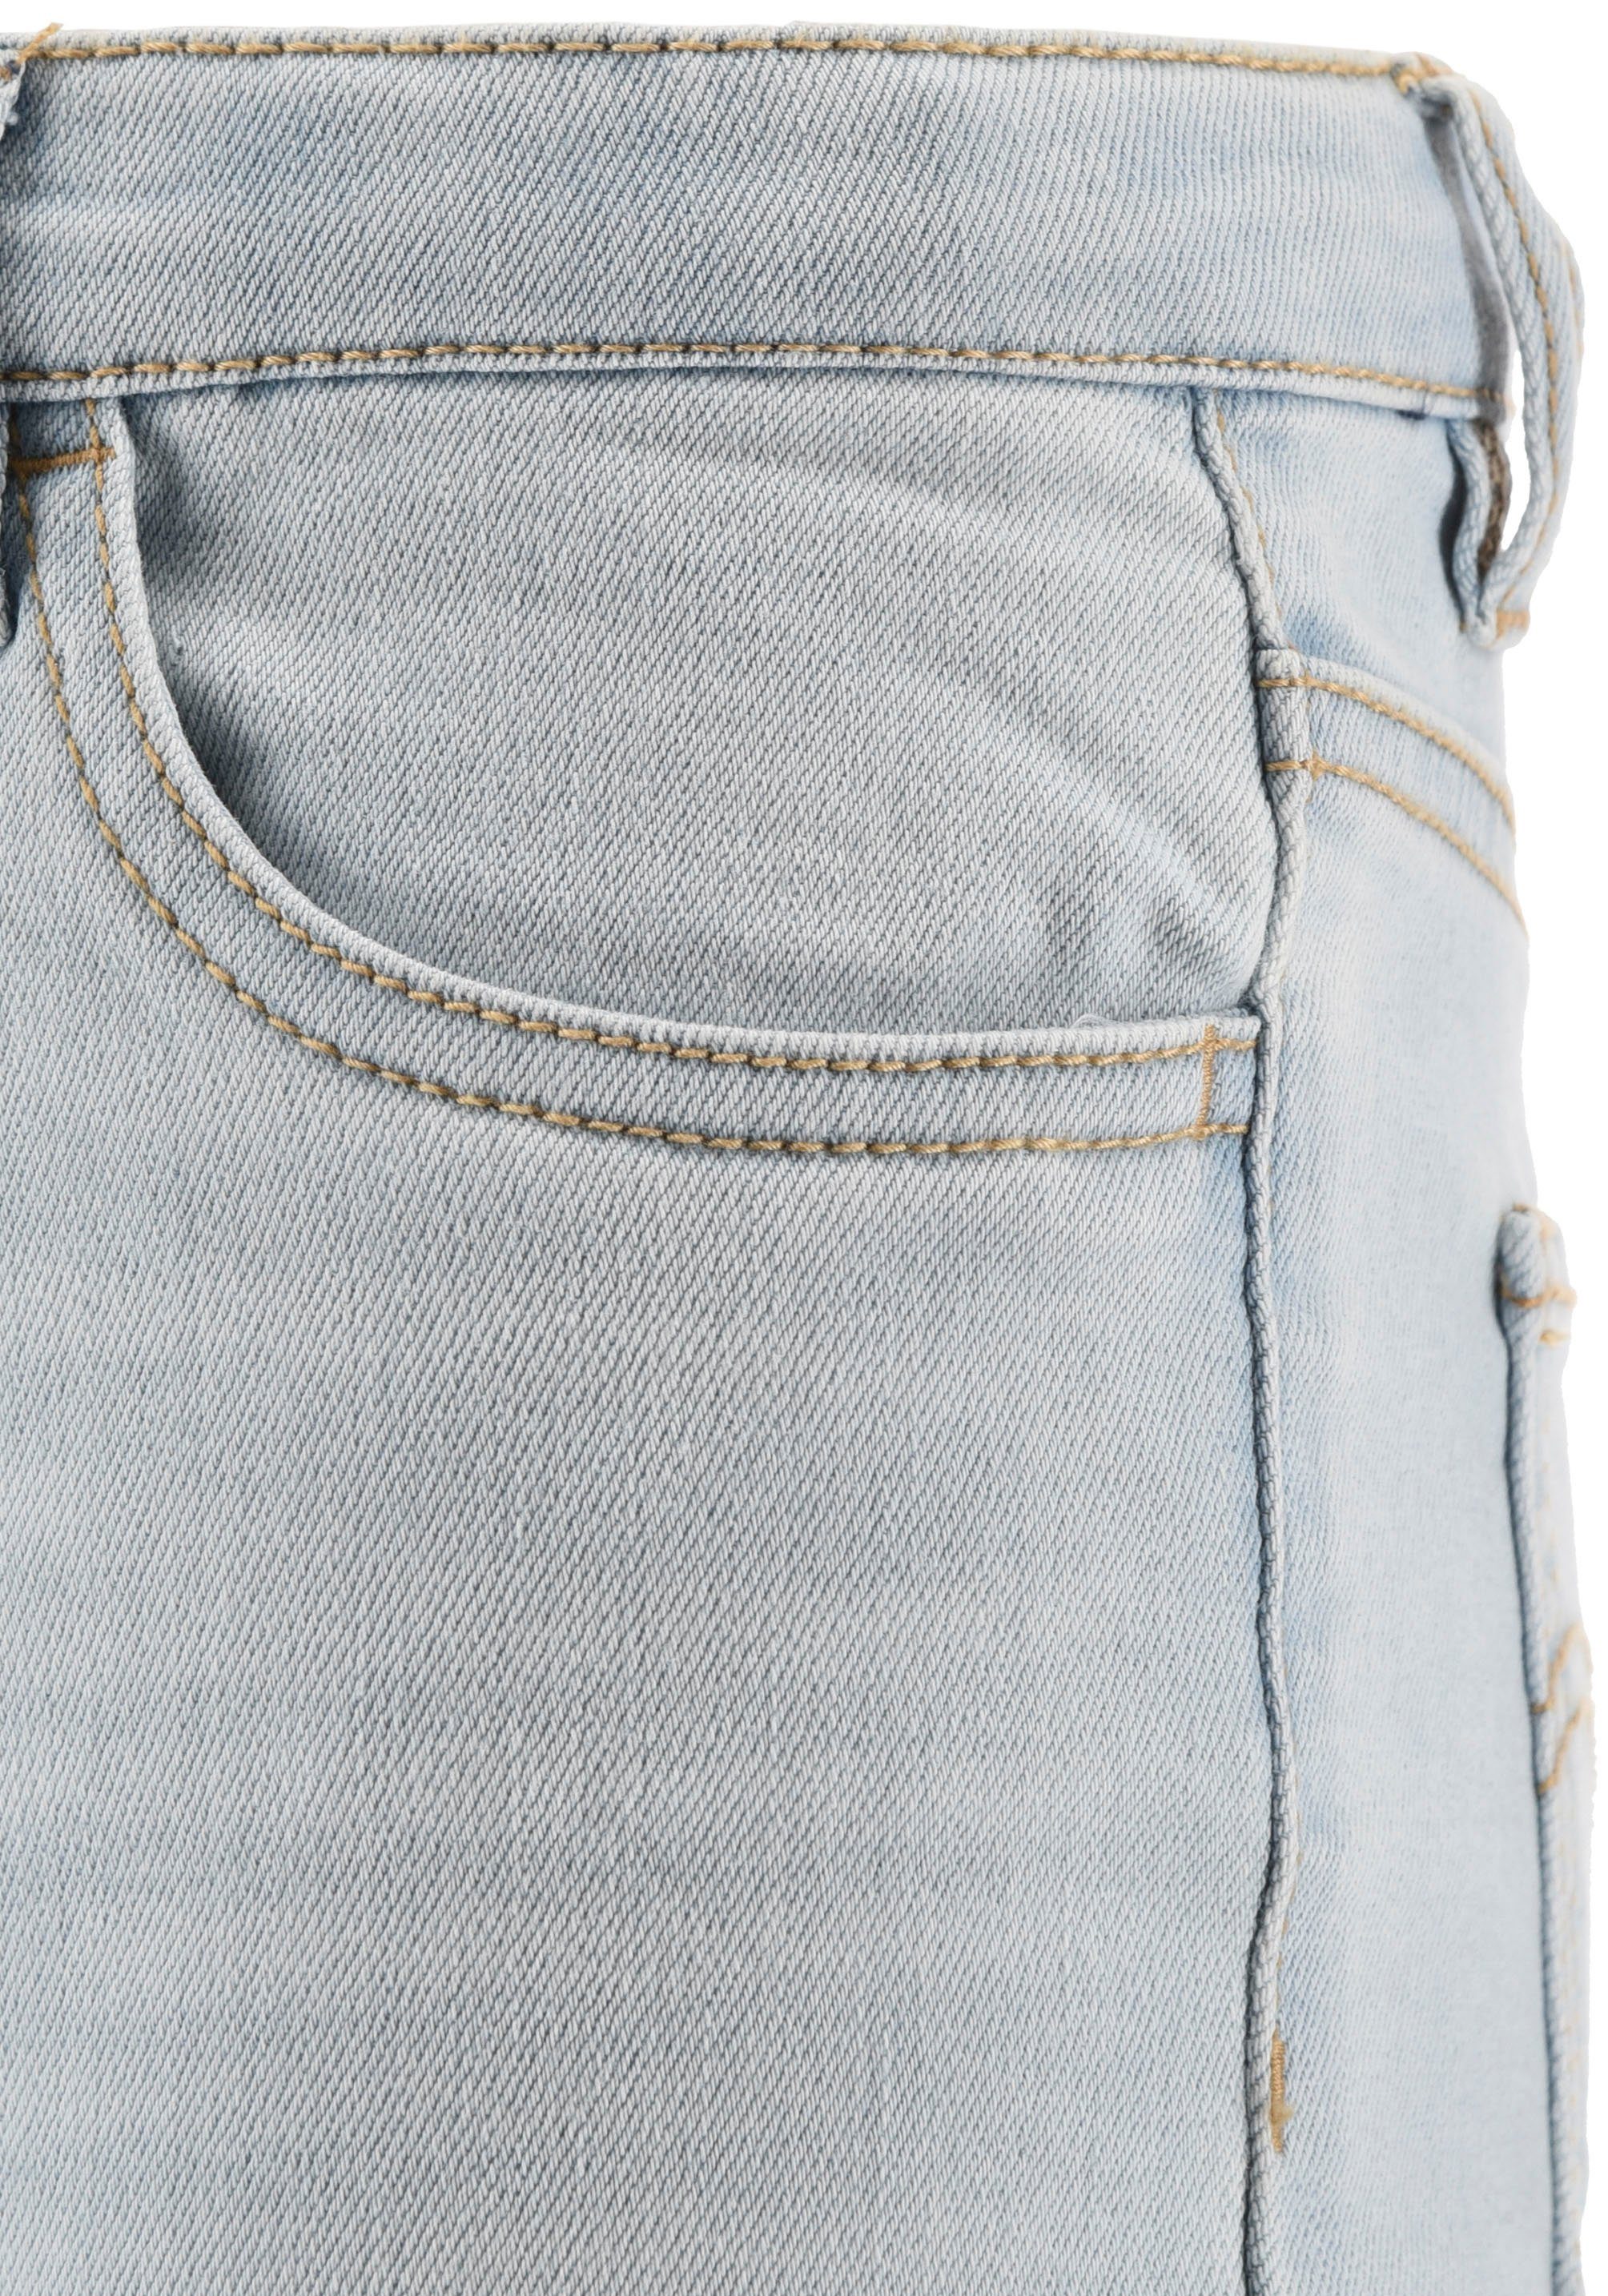 Levi's® SUPER 720™ Stretch-Jeans RISE HIGH GIRLS superlight Kids SKINNY for